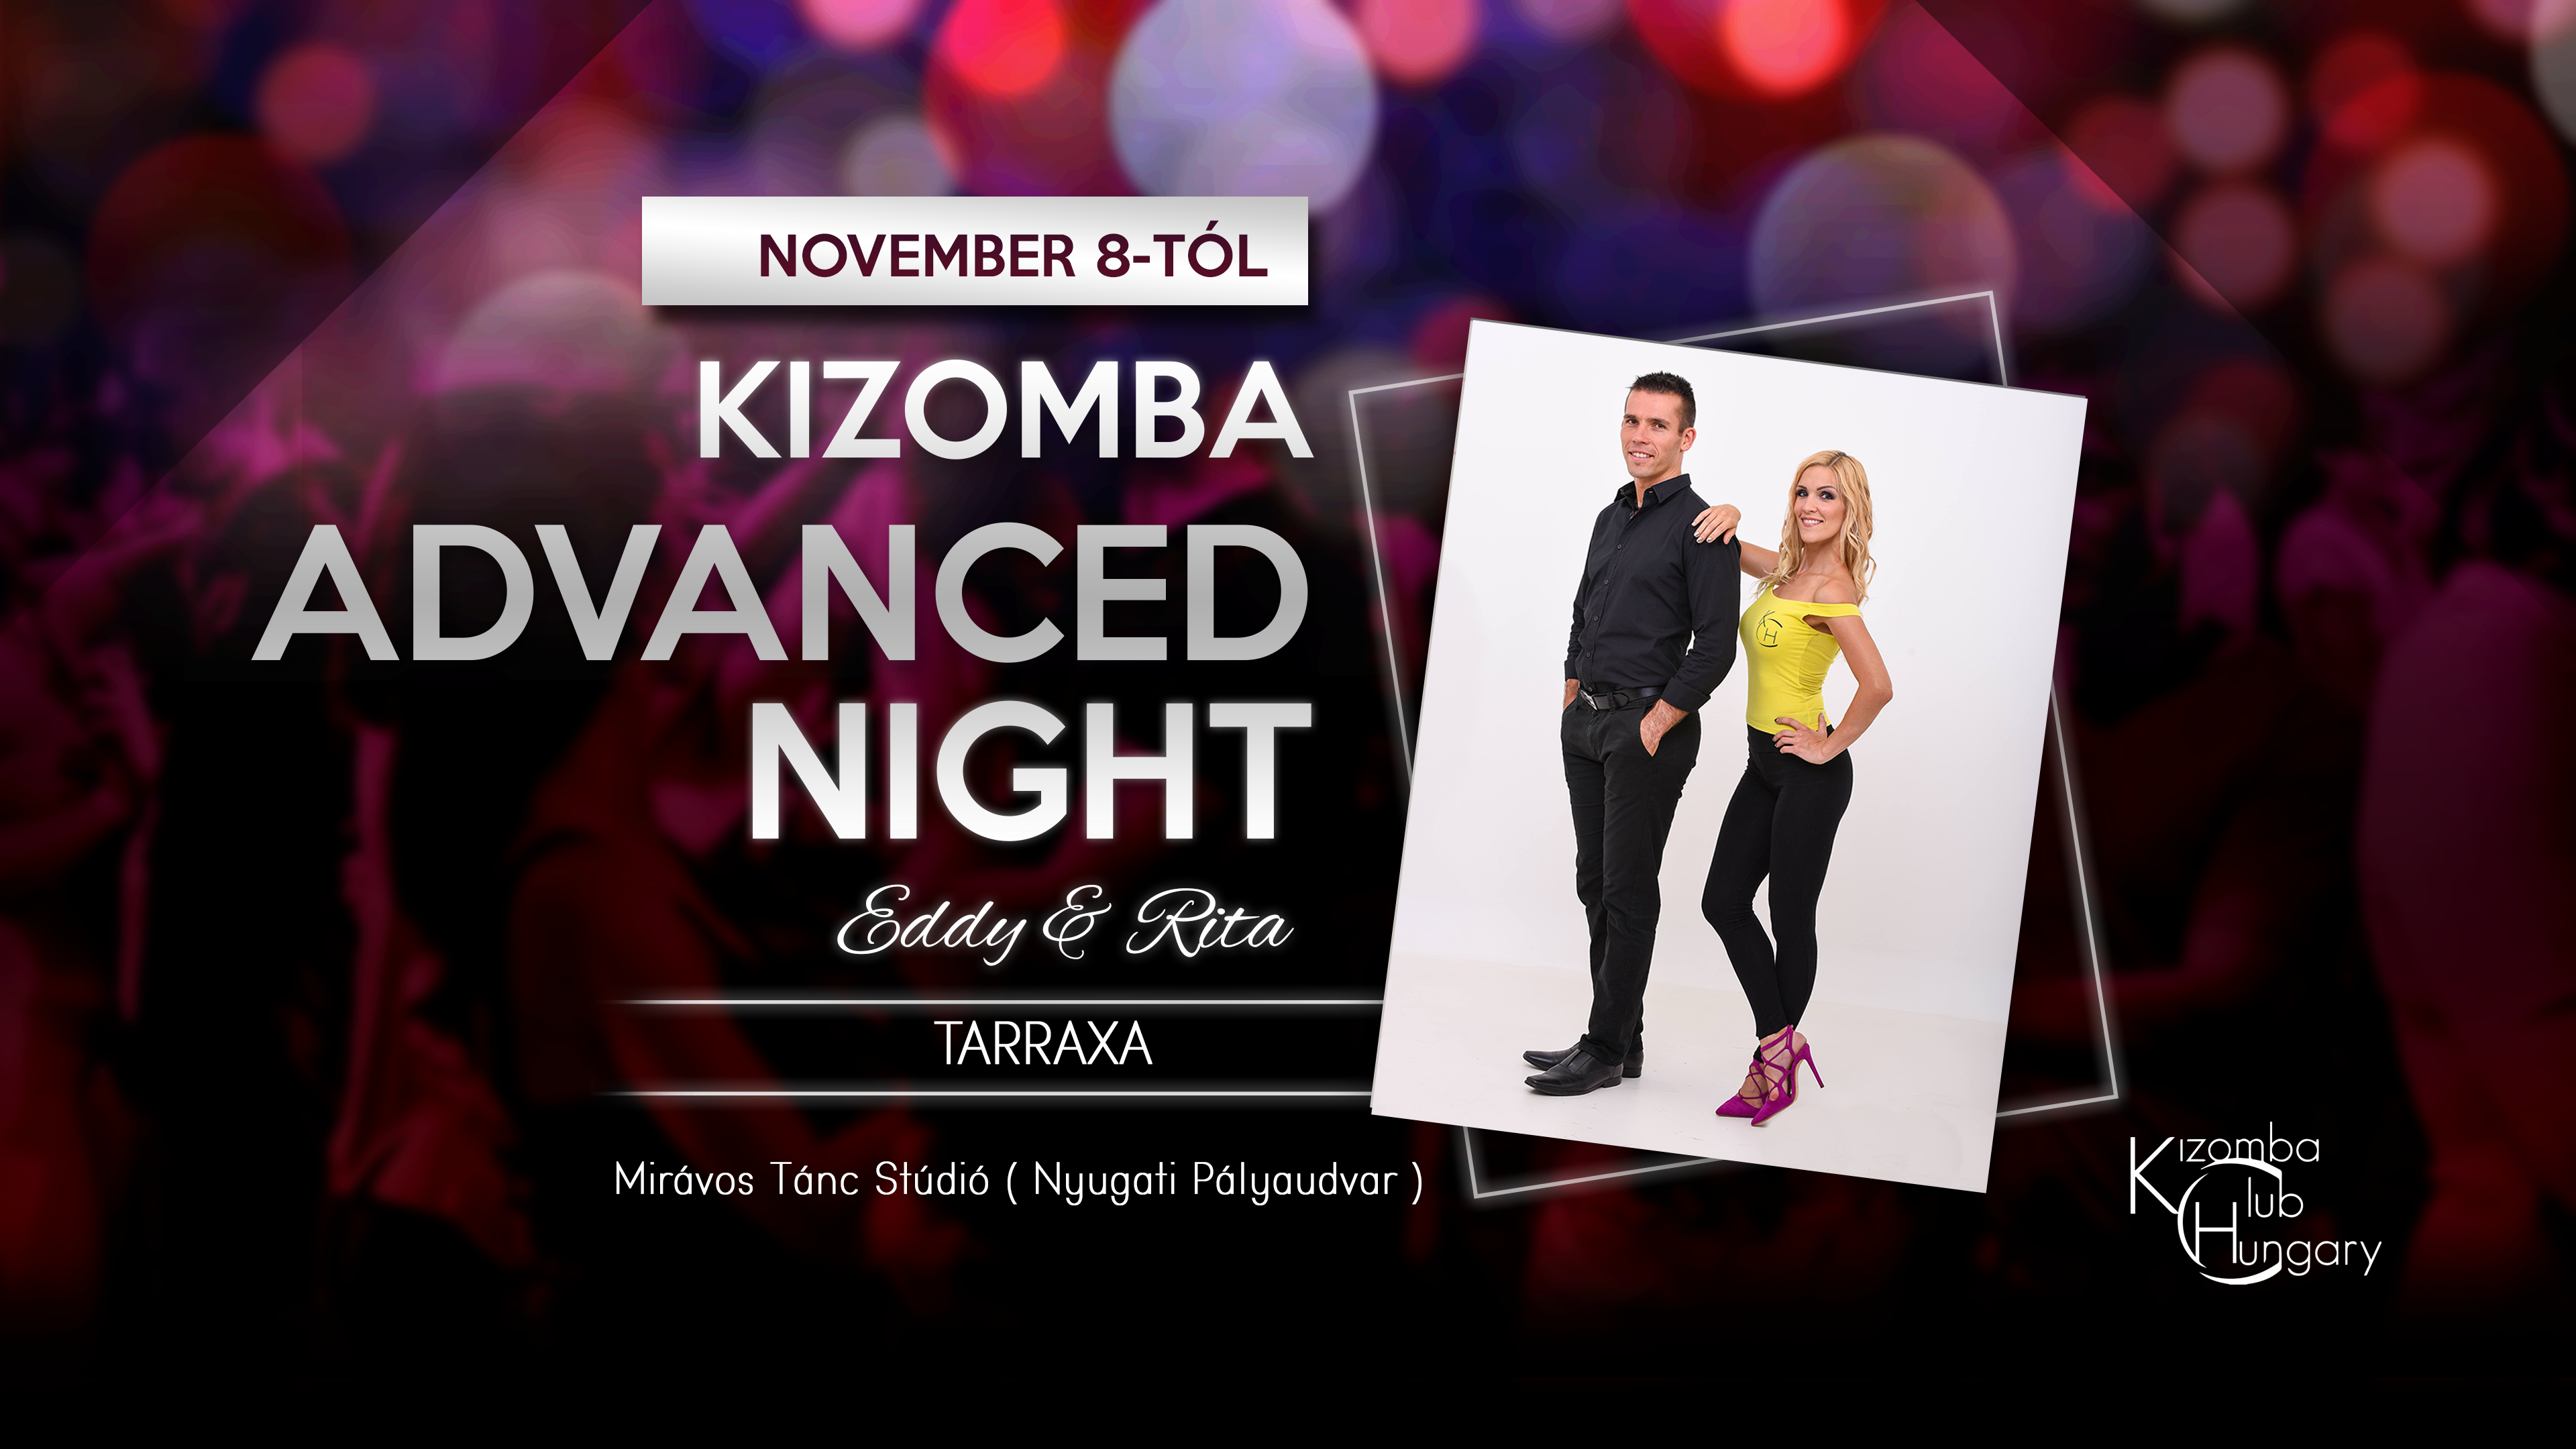 Kizomba Advanced Night - Tarraxa - Eddy&Rita (KCH)